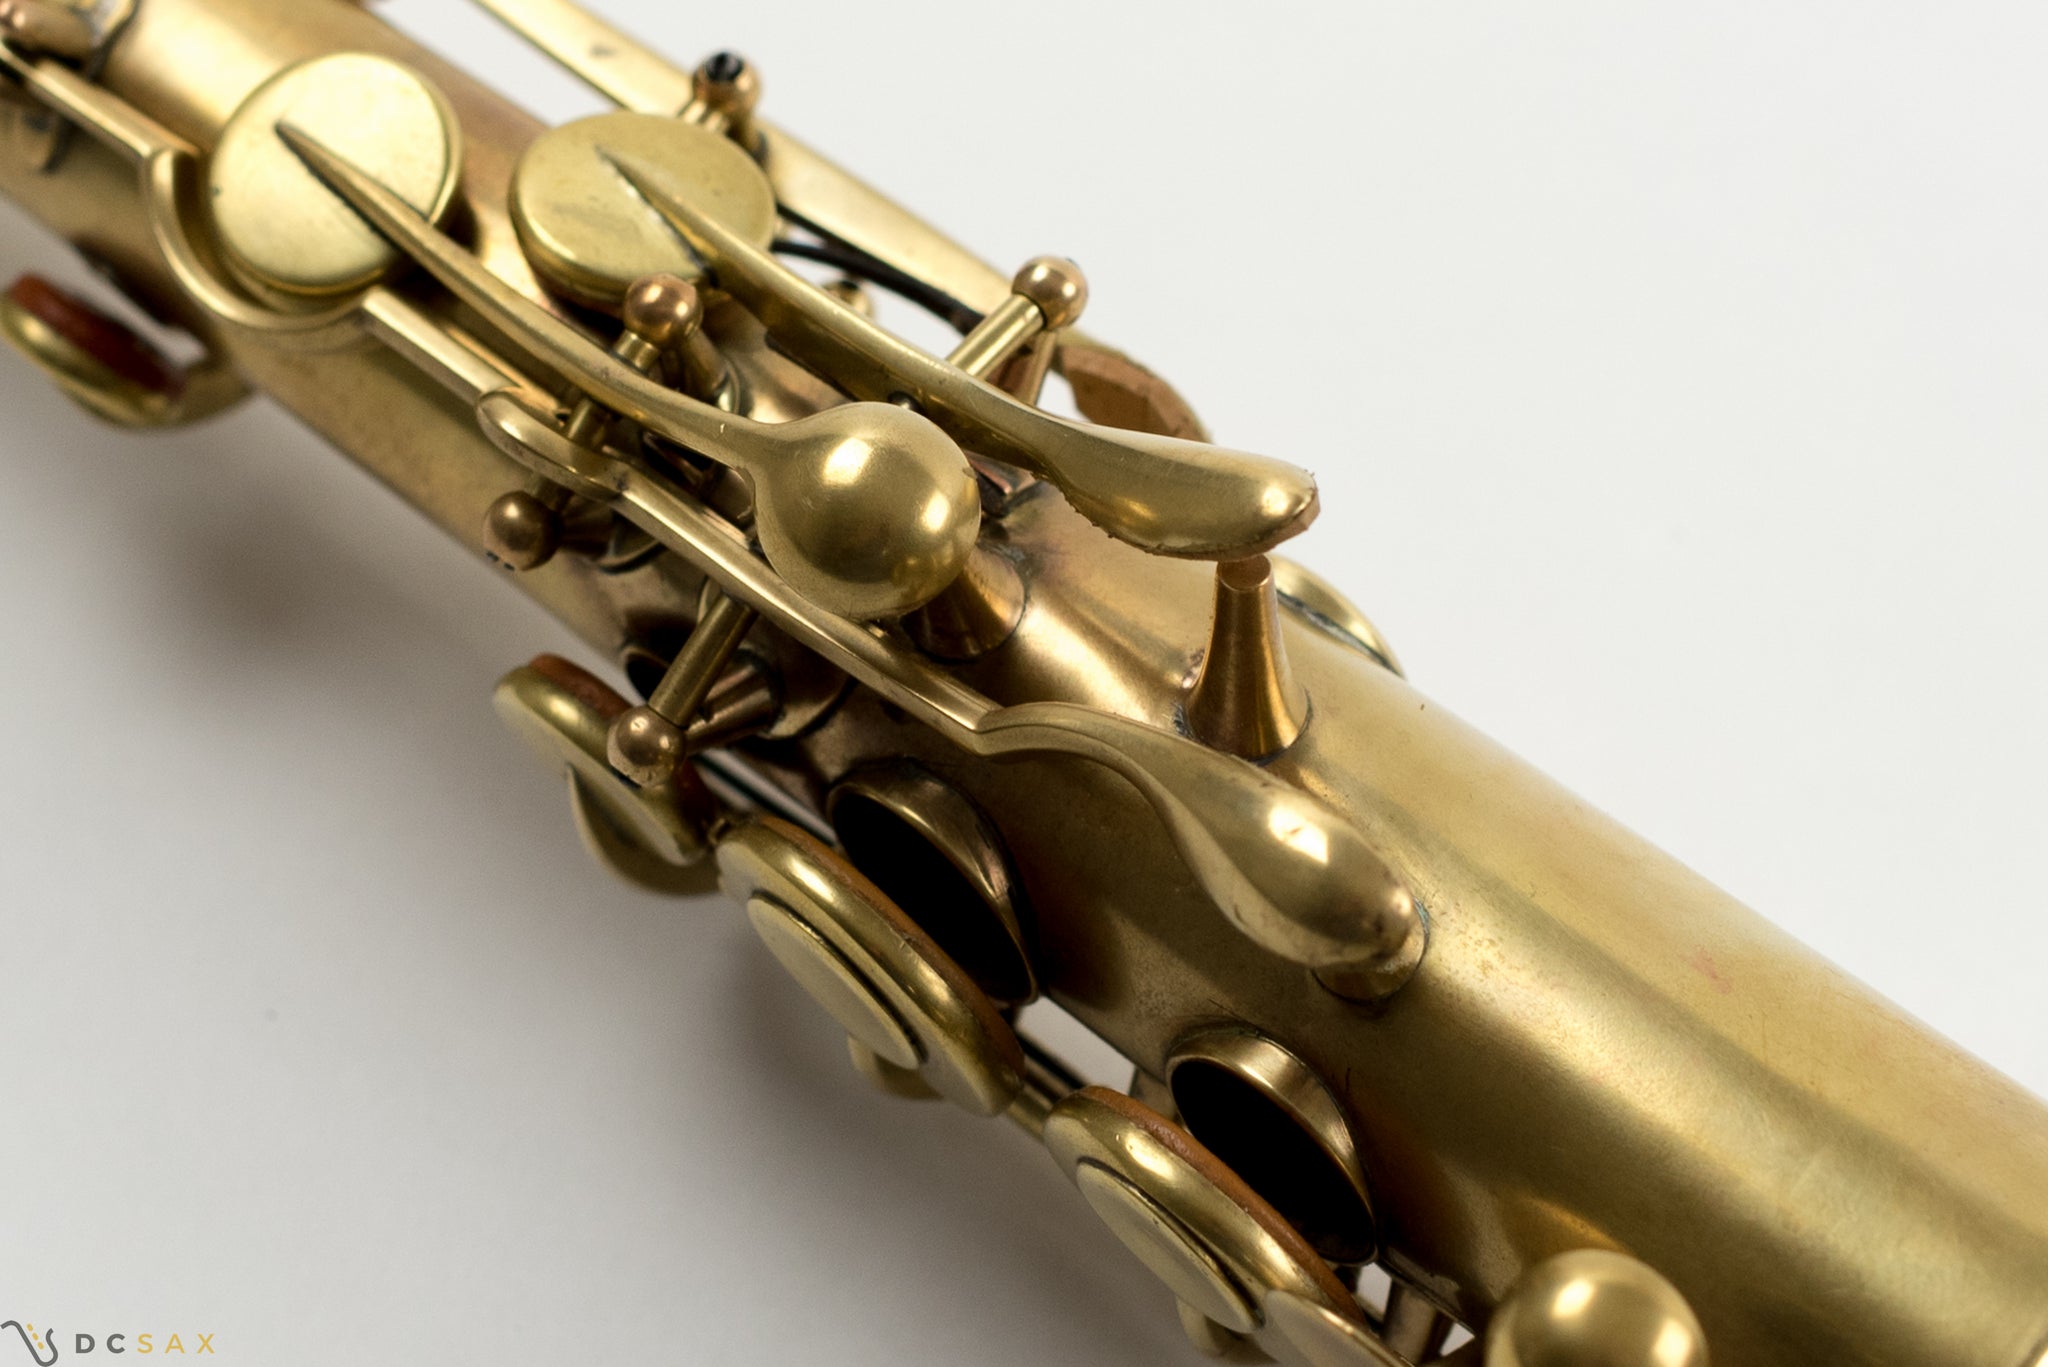 1865 Adolphe Sax Alto Saxophone, Just Restored